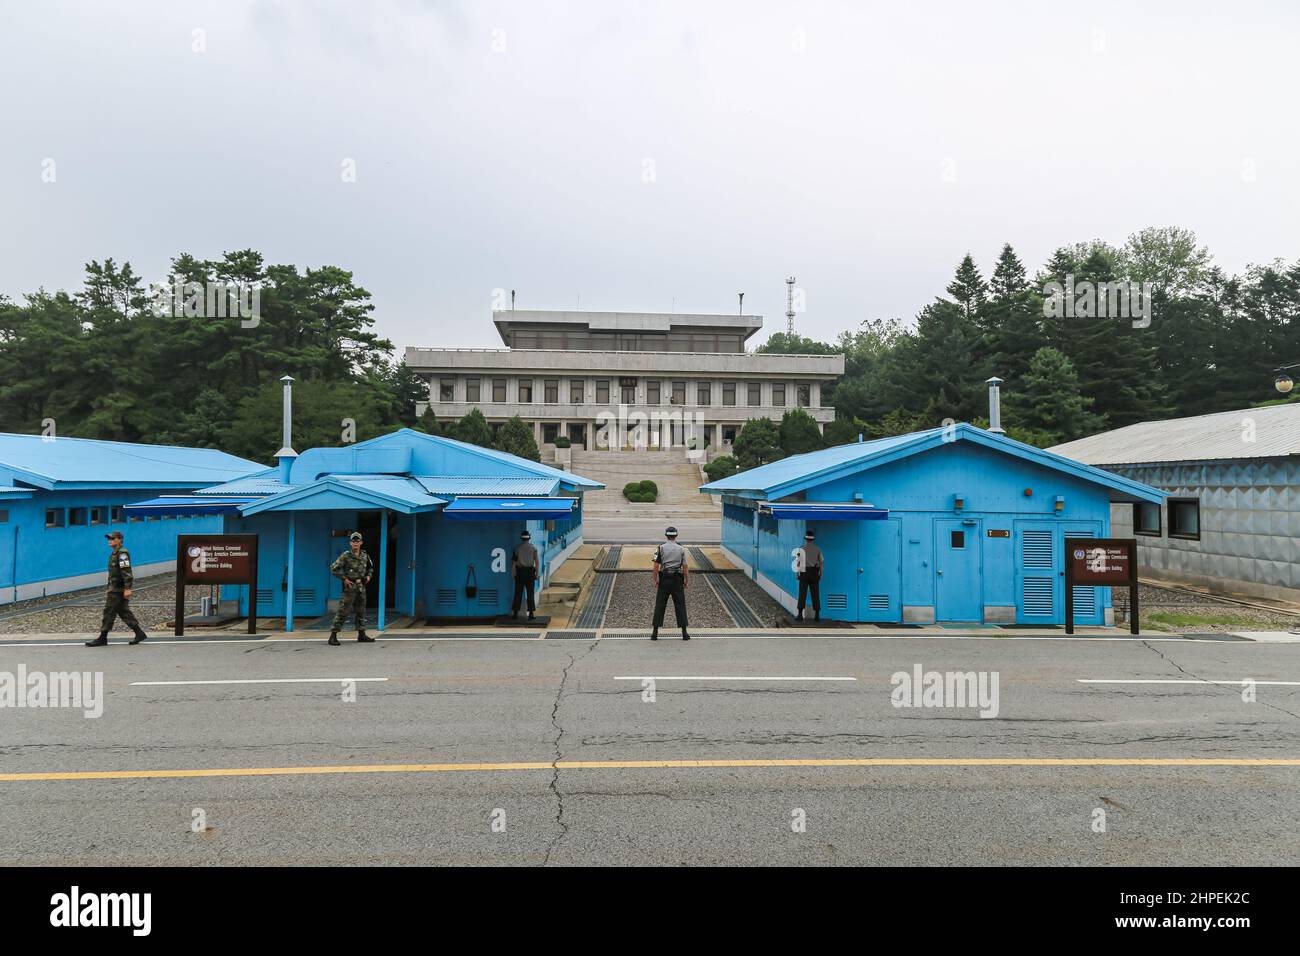 Panmunjom, Corea del Sur - 28 de julio de 2020: La zona desmilitarizada o zona desmilitarizada entre los dos países coreanos. Cruzando la Península Coreana cerca de la 3 Foto de stock